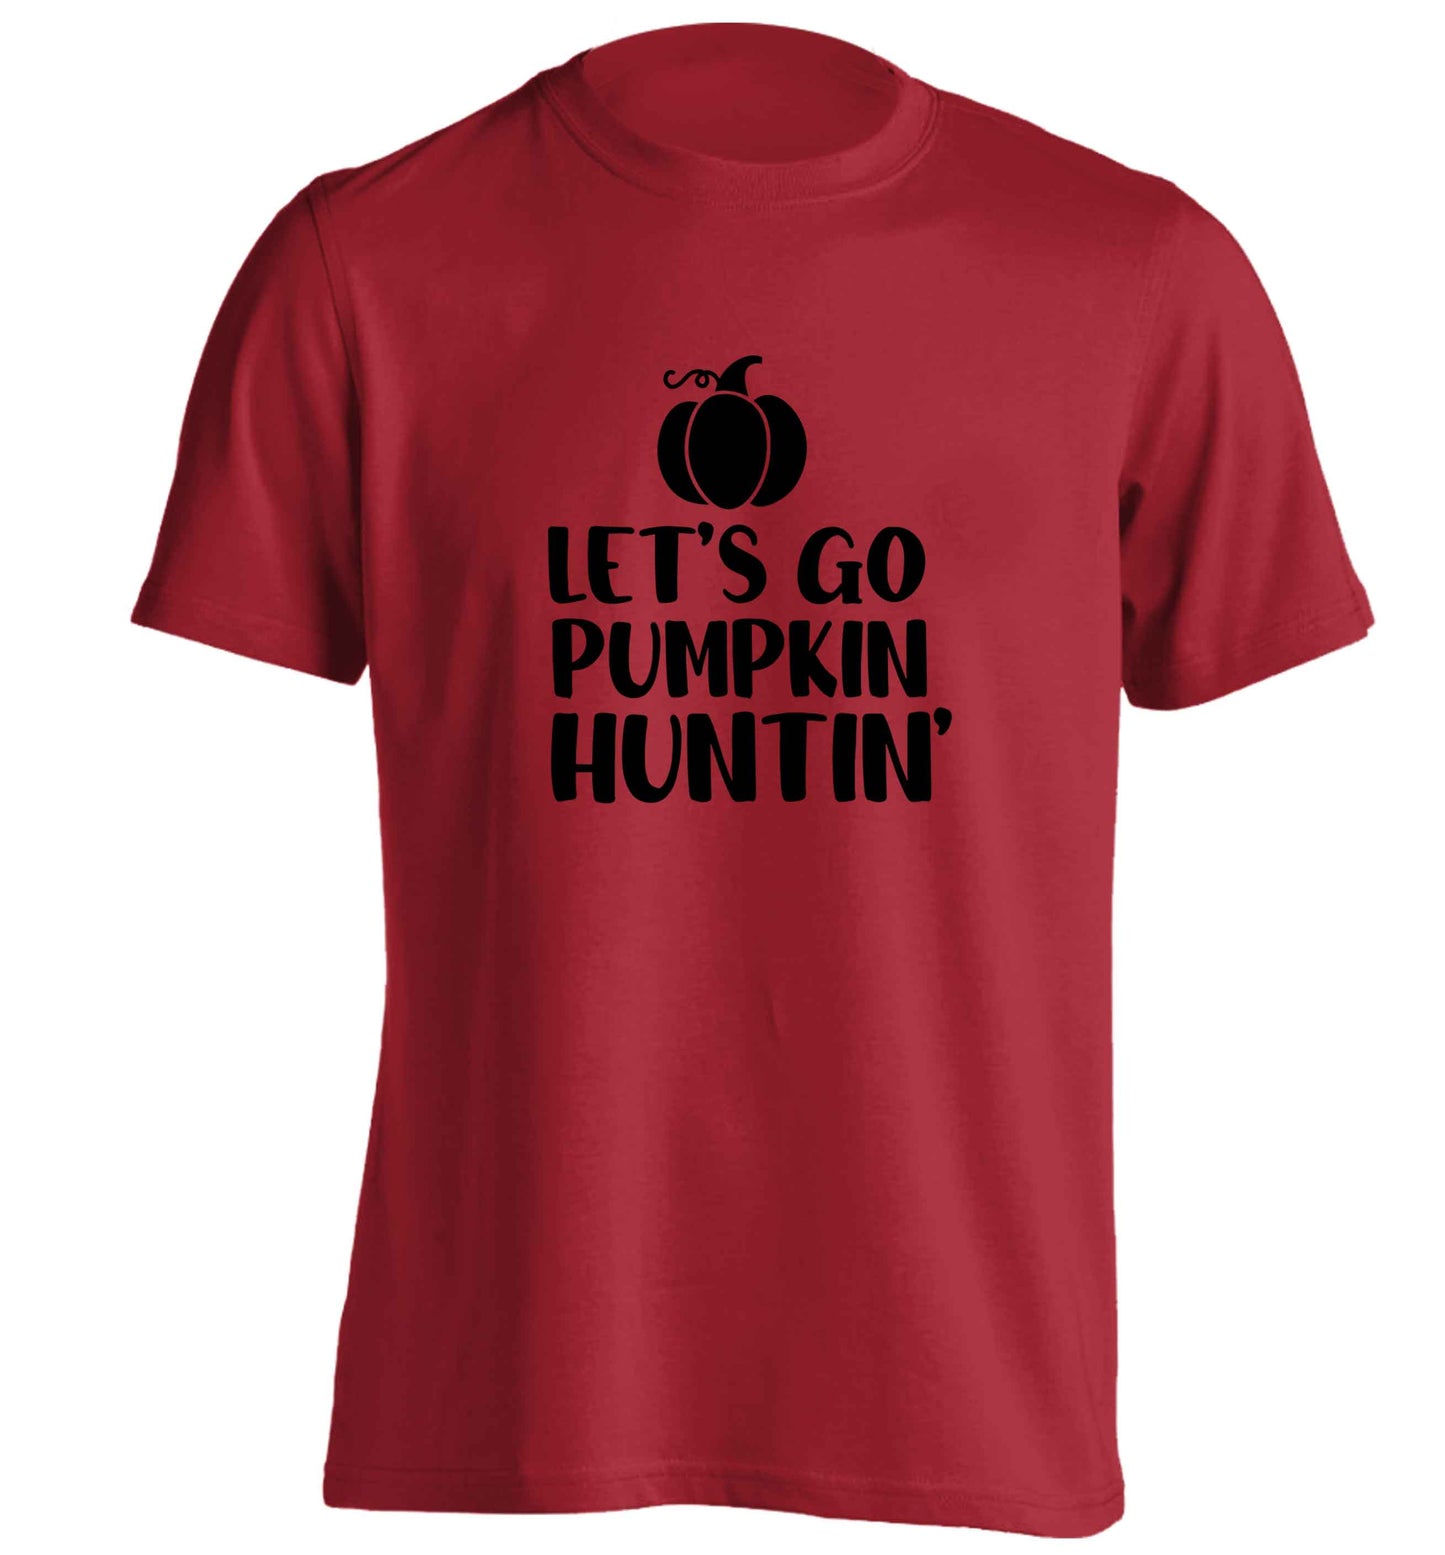 Let's go Pumpkin Huntin'adults unisex red Tshirt 2XL